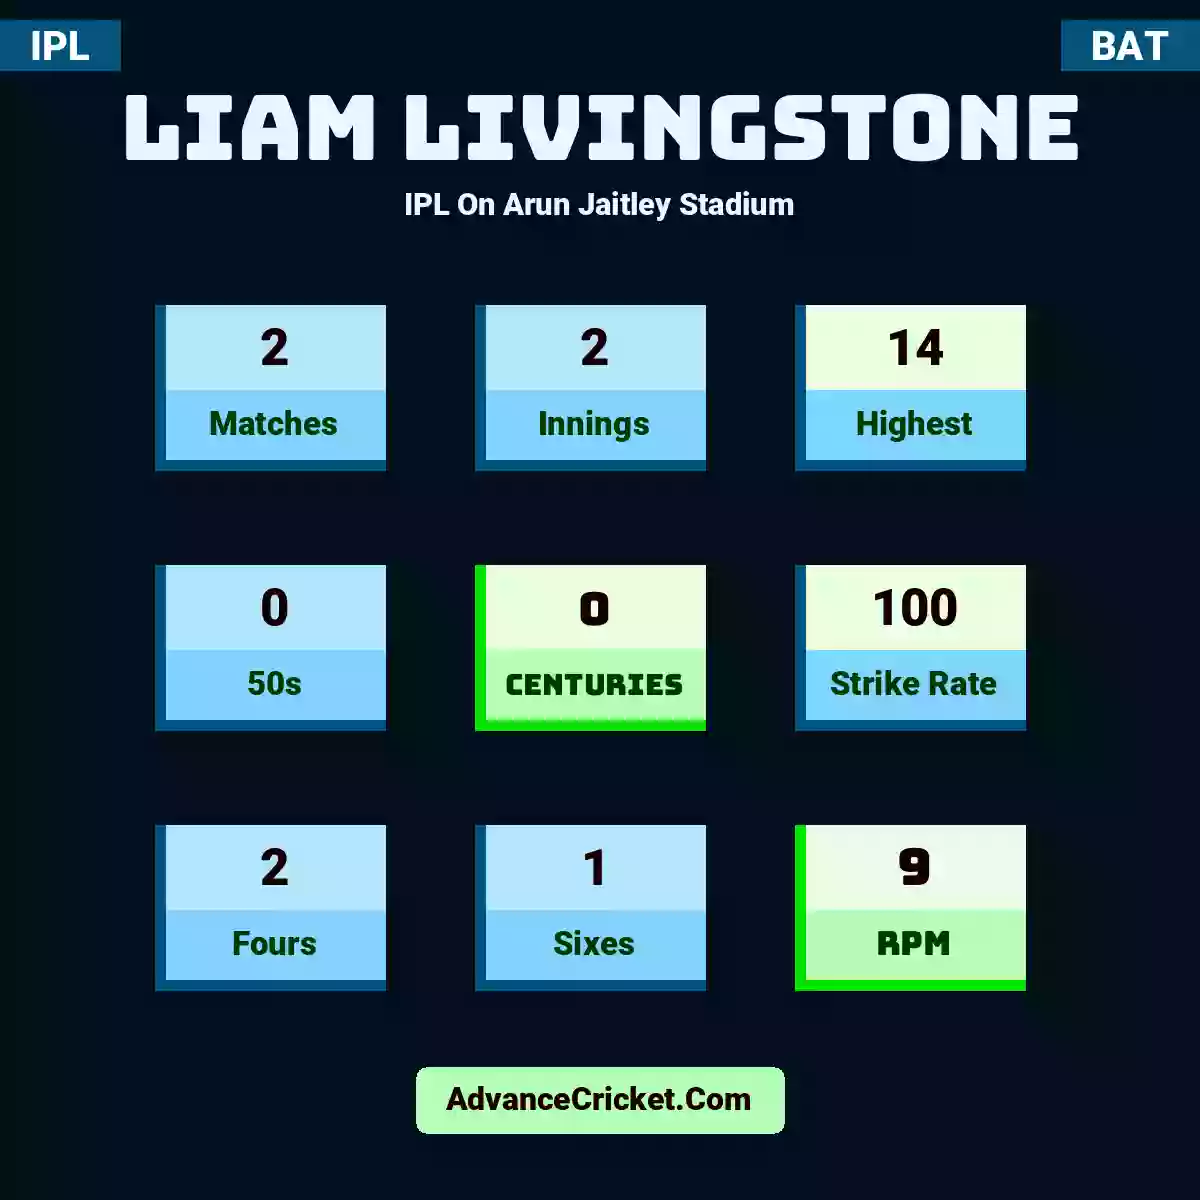 Liam Livingstone IPL  On Arun Jaitley Stadium, Liam Livingstone played 2 matches, scored 14 runs as highest, 0 half-centuries, and 0 centuries, with a strike rate of 100. L.Livingstone hit 2 fours and 1 sixes, with an RPM of 9.